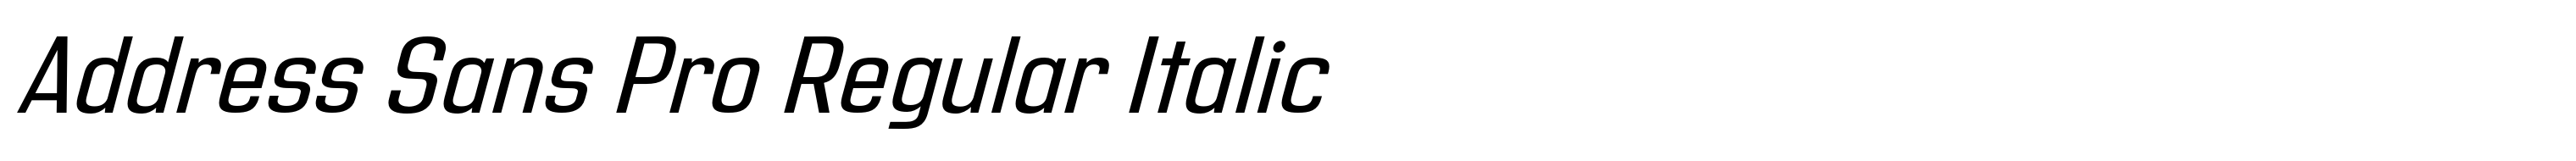 Address Sans Pro Regular Italic